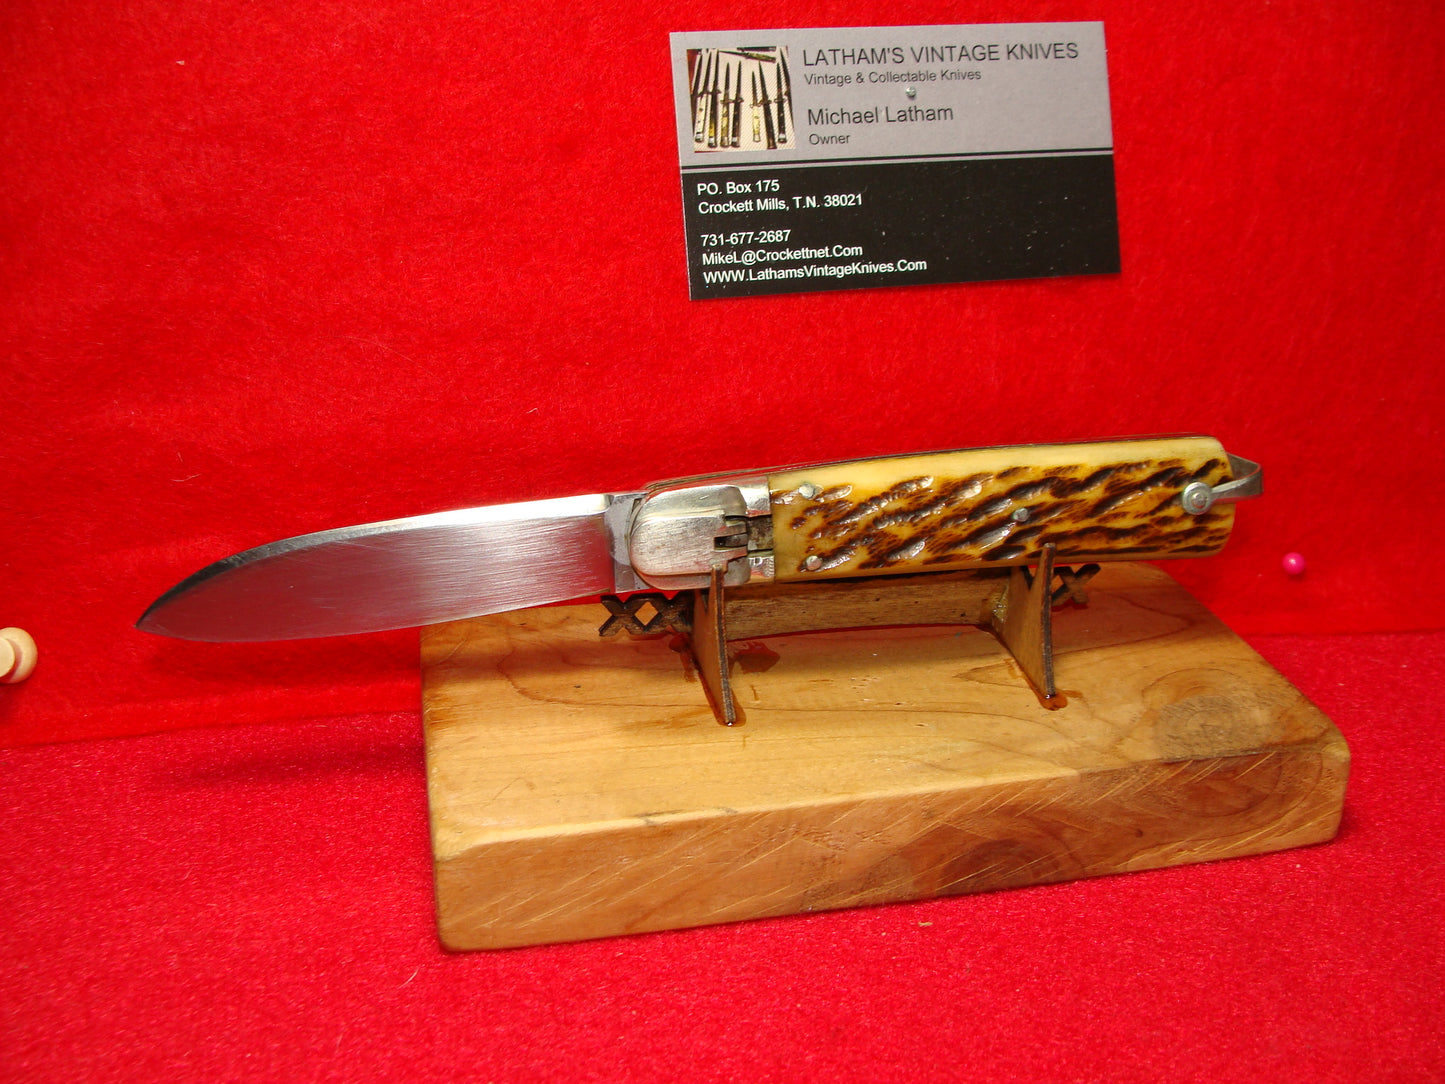 MAKI INOX FRENCH 1958-68 LEVER AUTOMATIC 10 CM FRENCH AUTOMATIC KNIFE JIGGED BONE HANDLES